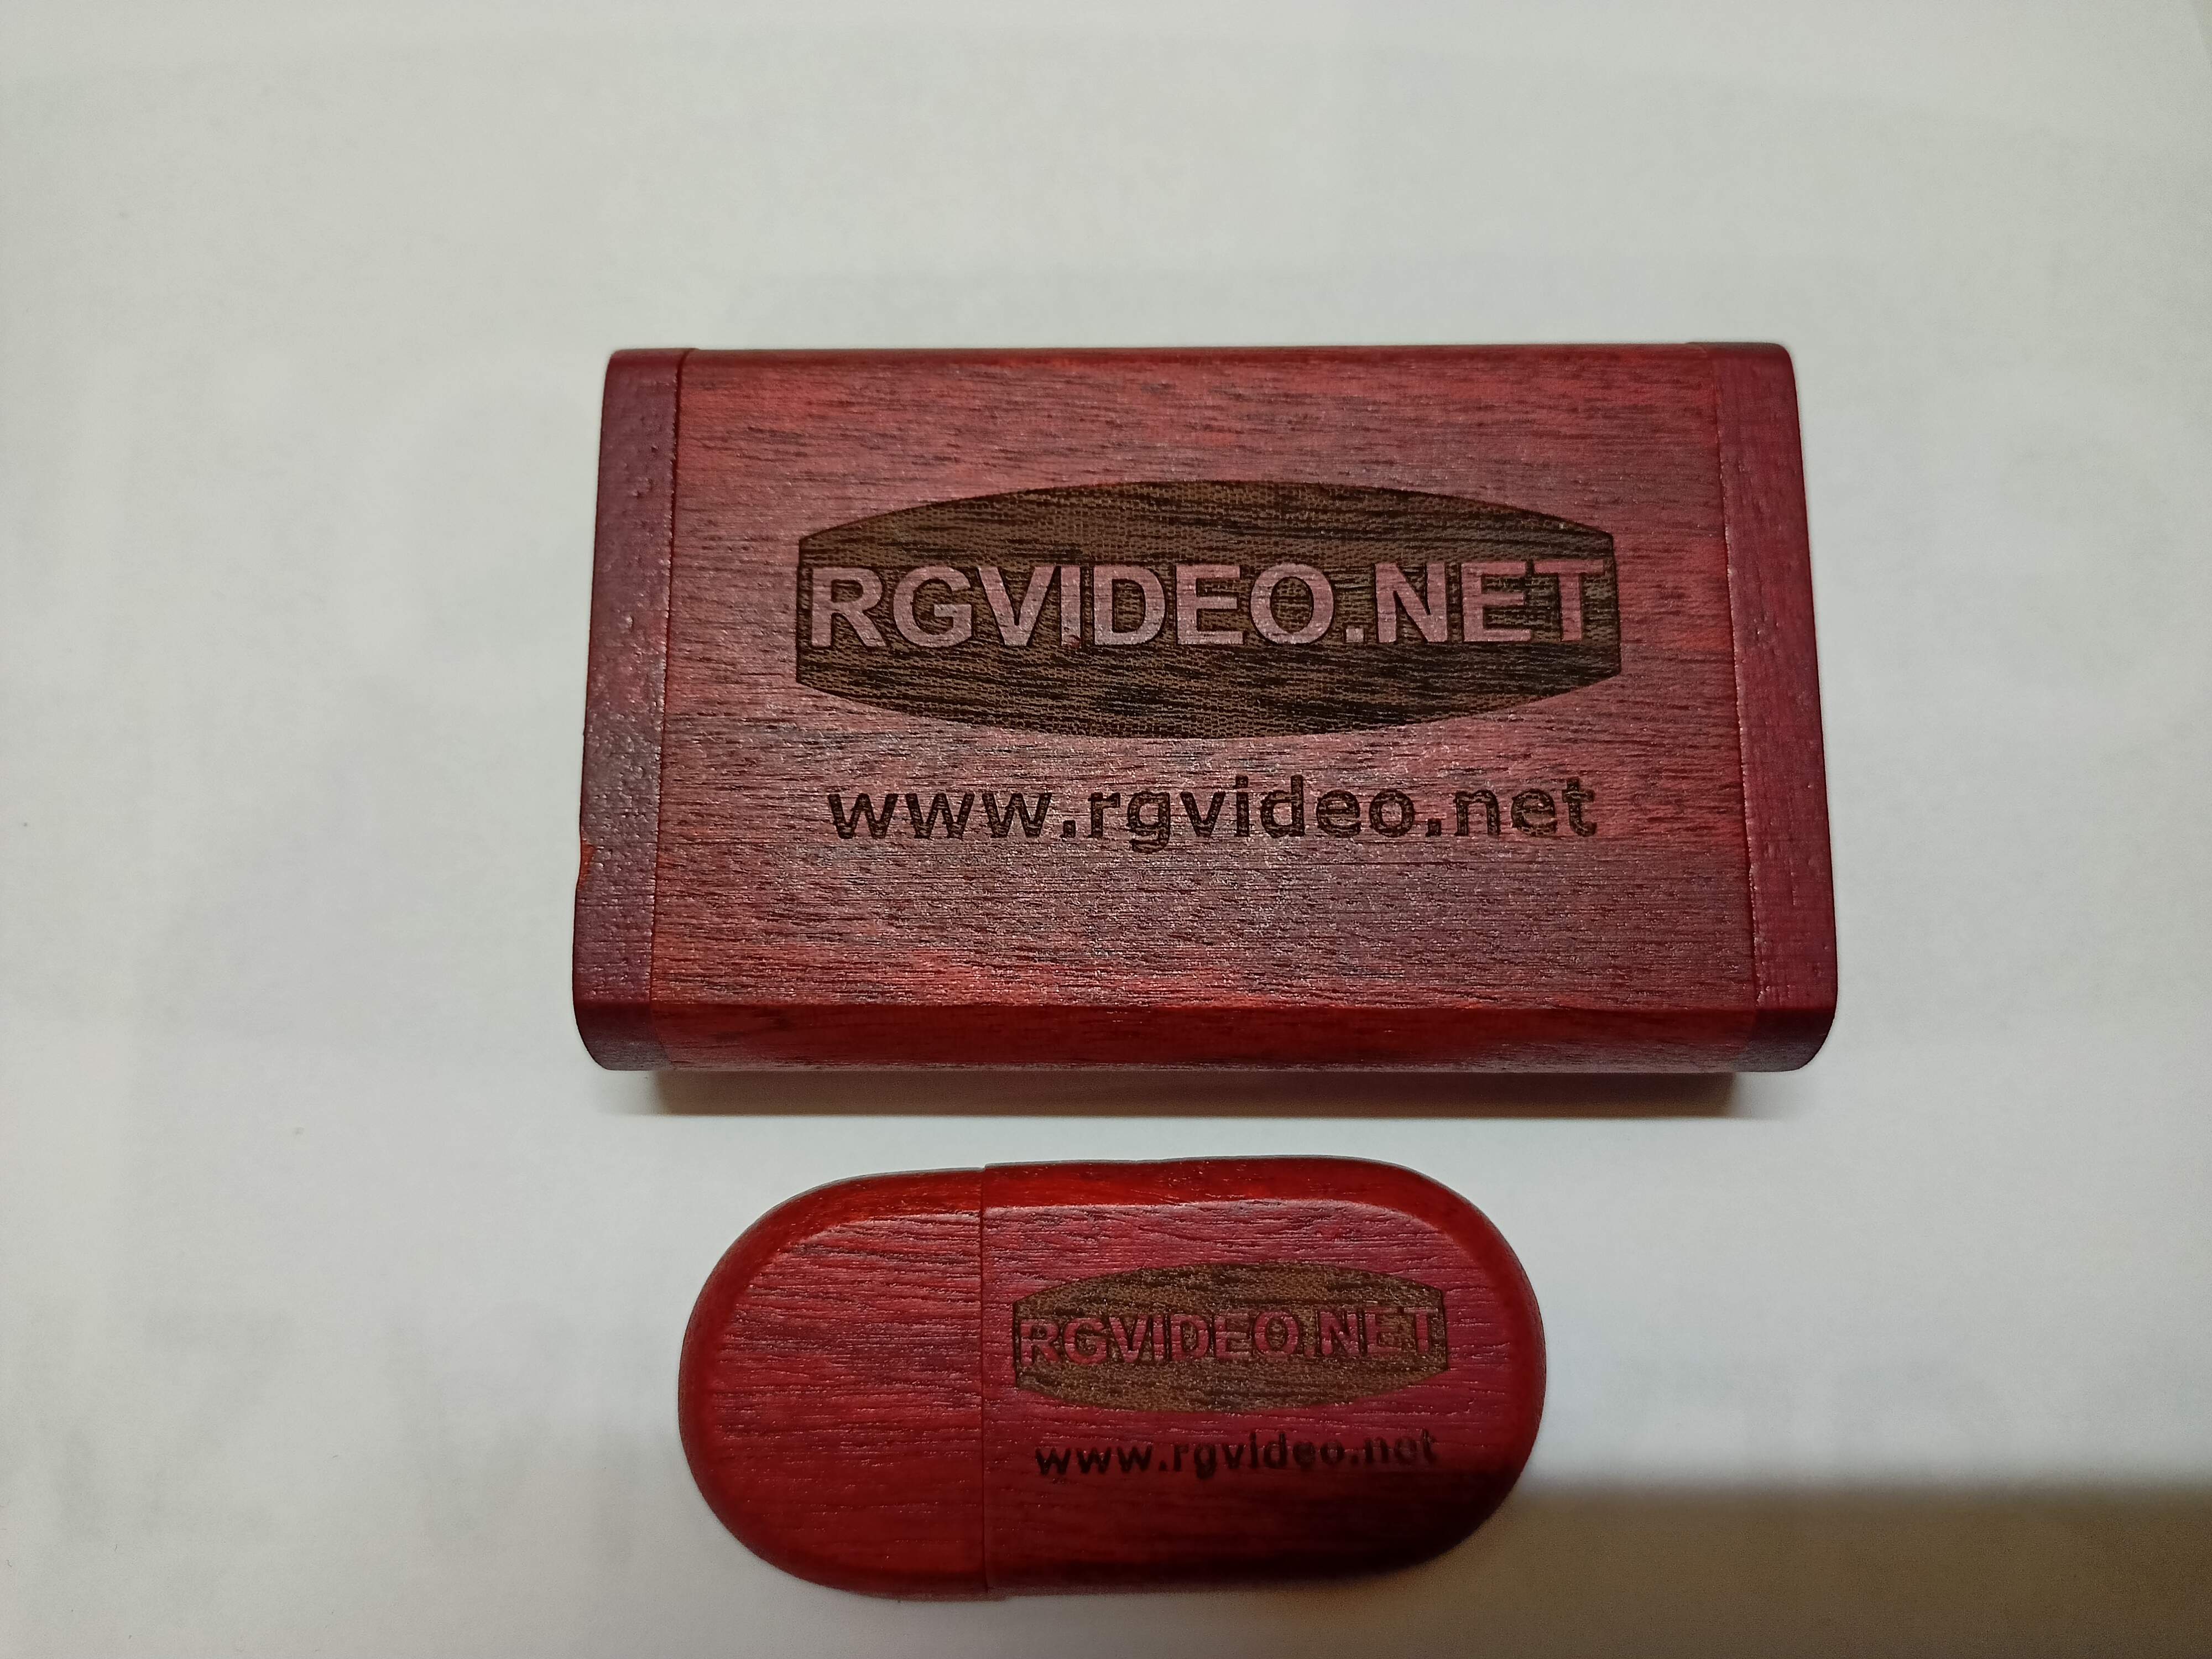 Pendrive drewniany plus pudełko - RGVIDEO.NET